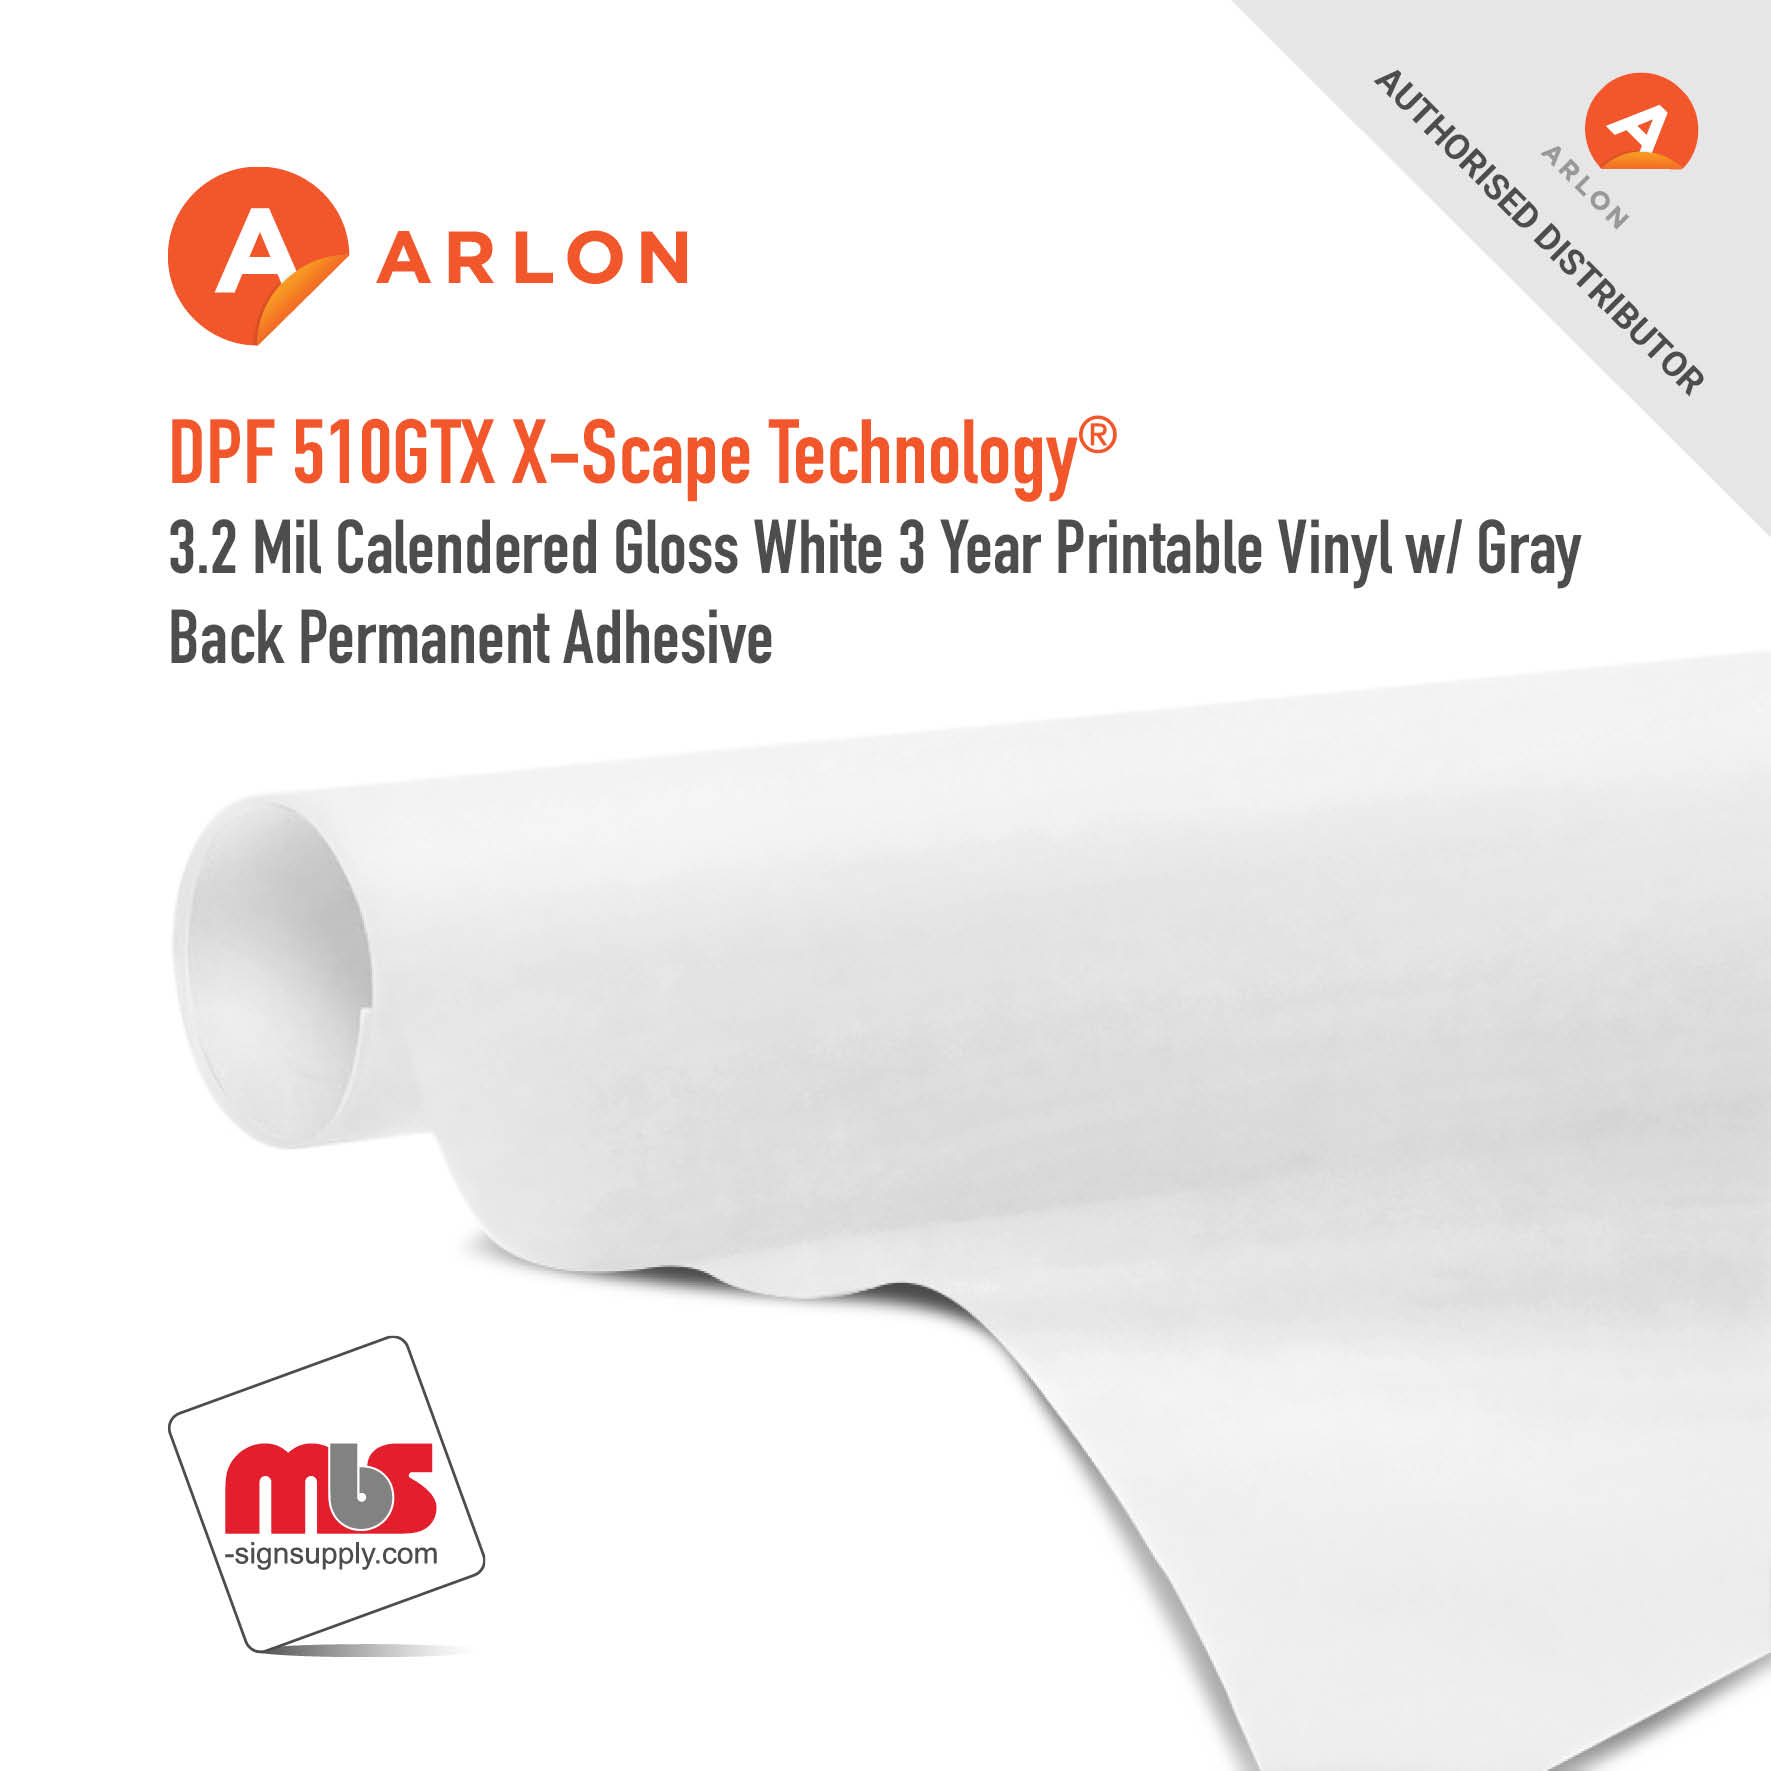 60'' x 50 Yard Roll - Arlon DPF 510GTX X-Scape Technology® 3.2 Mil Calendered Gloss White 3 Year Printable Vinyl w/ Gray Back Permanent Adhesive